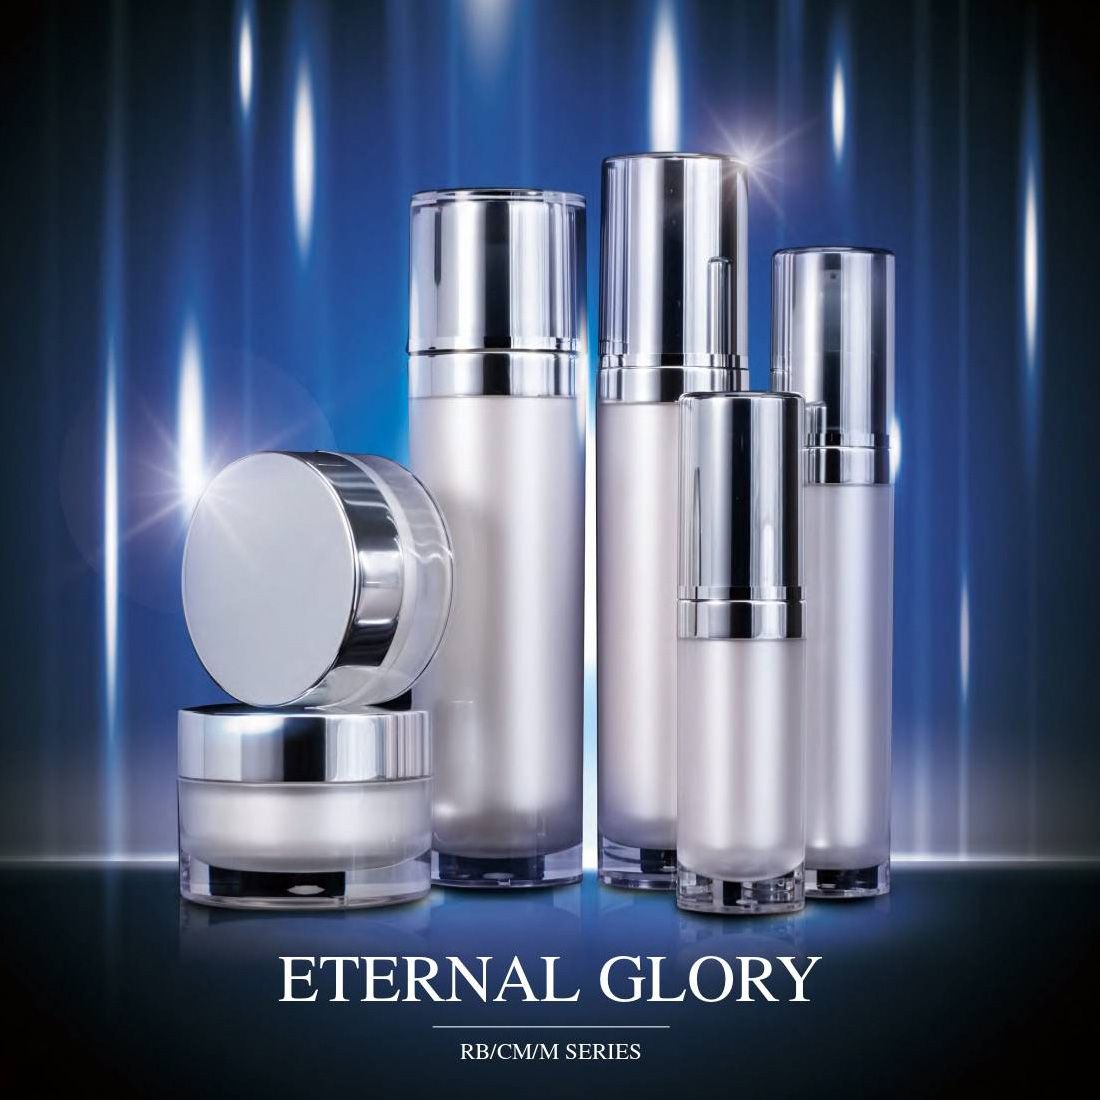 Eternal Glory (Kemasan Kosmetik & Perawatan Kulit Mewah Akrilik) Seri RB/CM/M